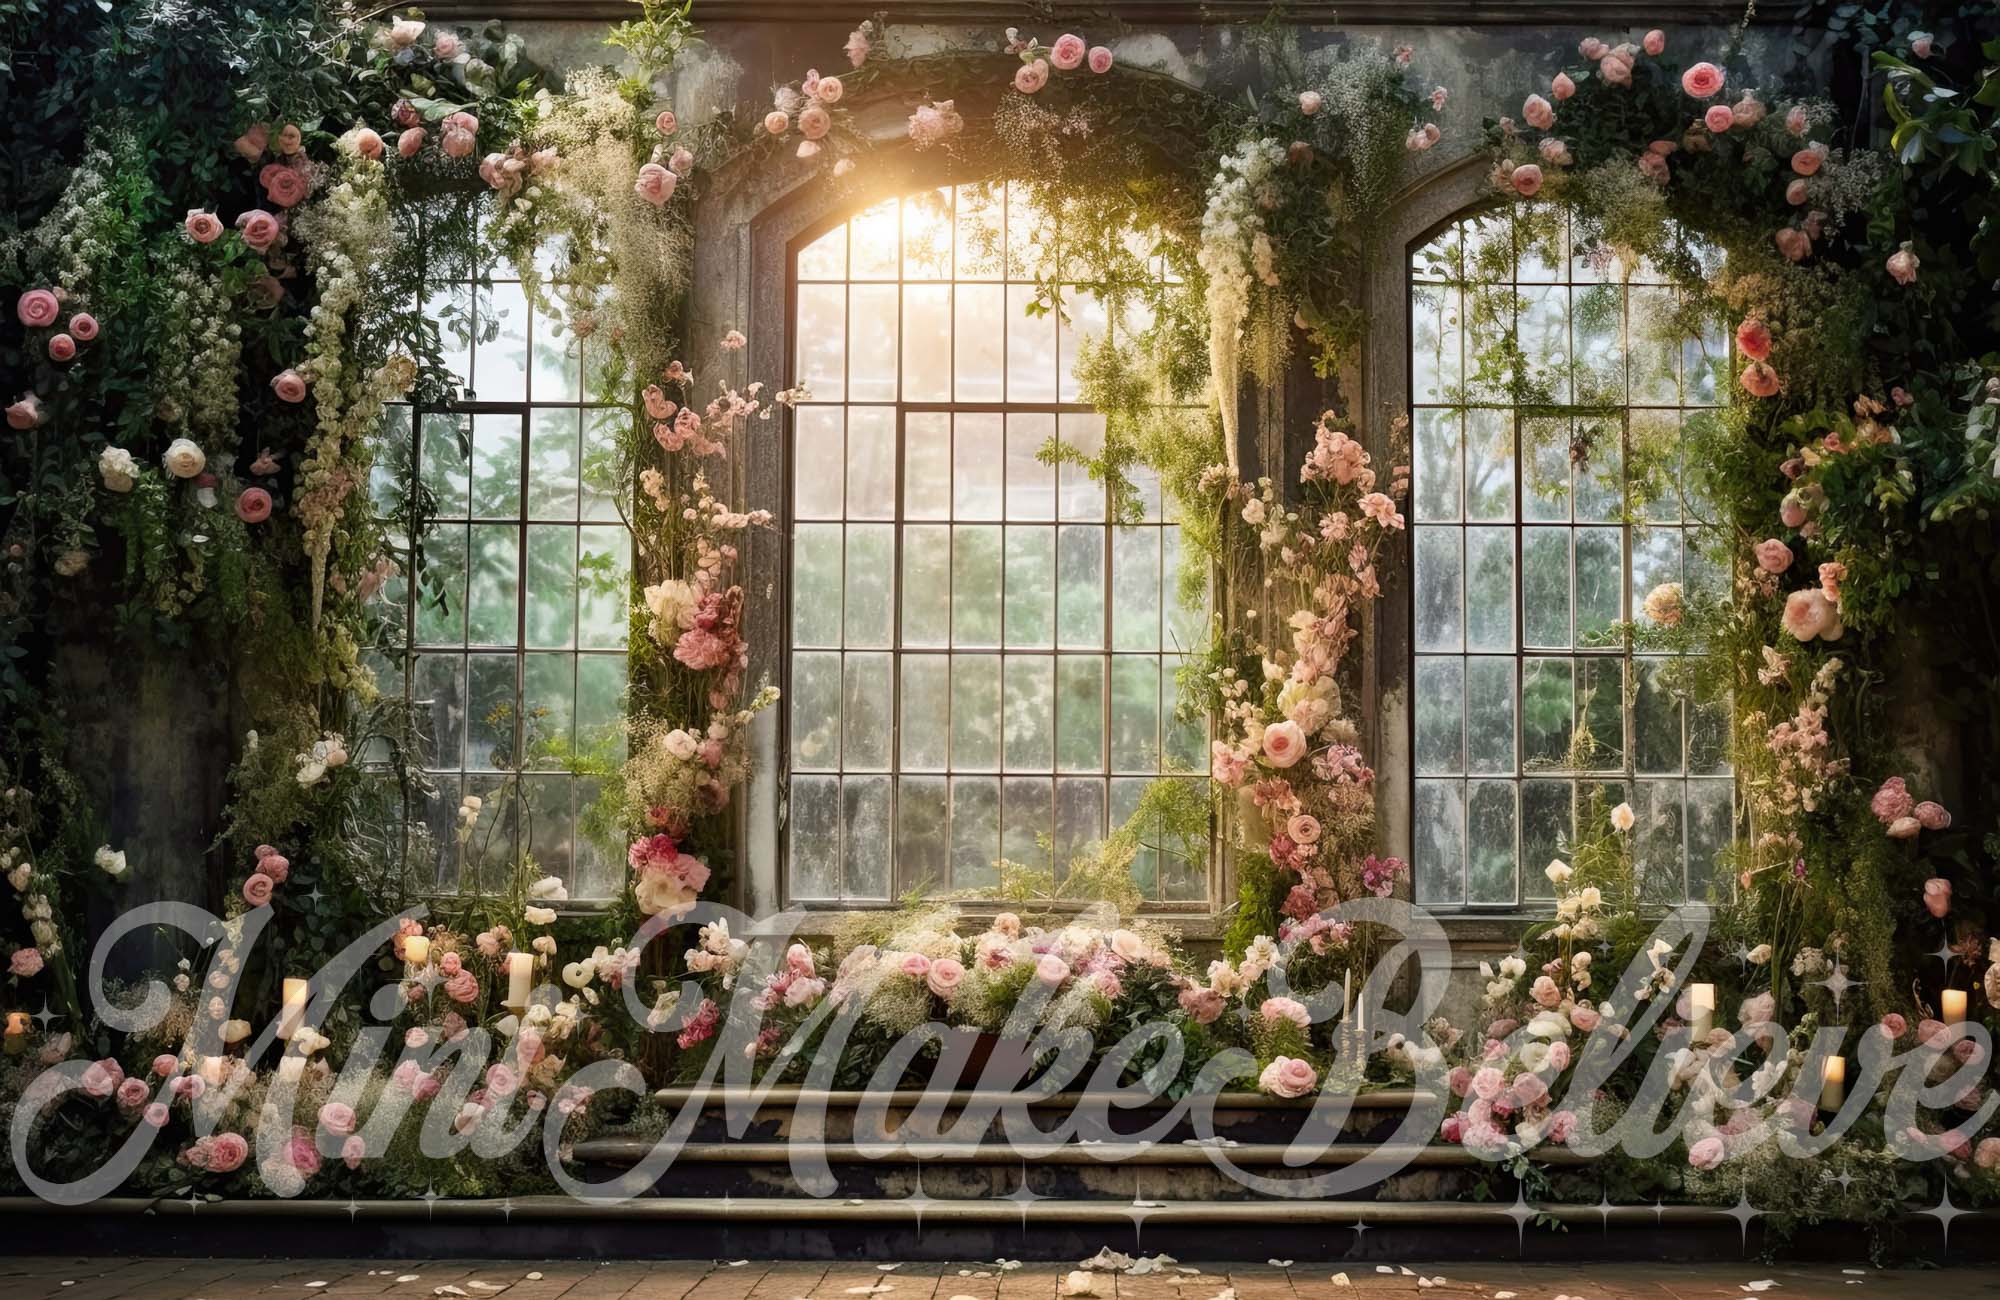 Kate Valentine Spring Wedding Backdrop Romantic Roses Designed by Mini MakeBelieve